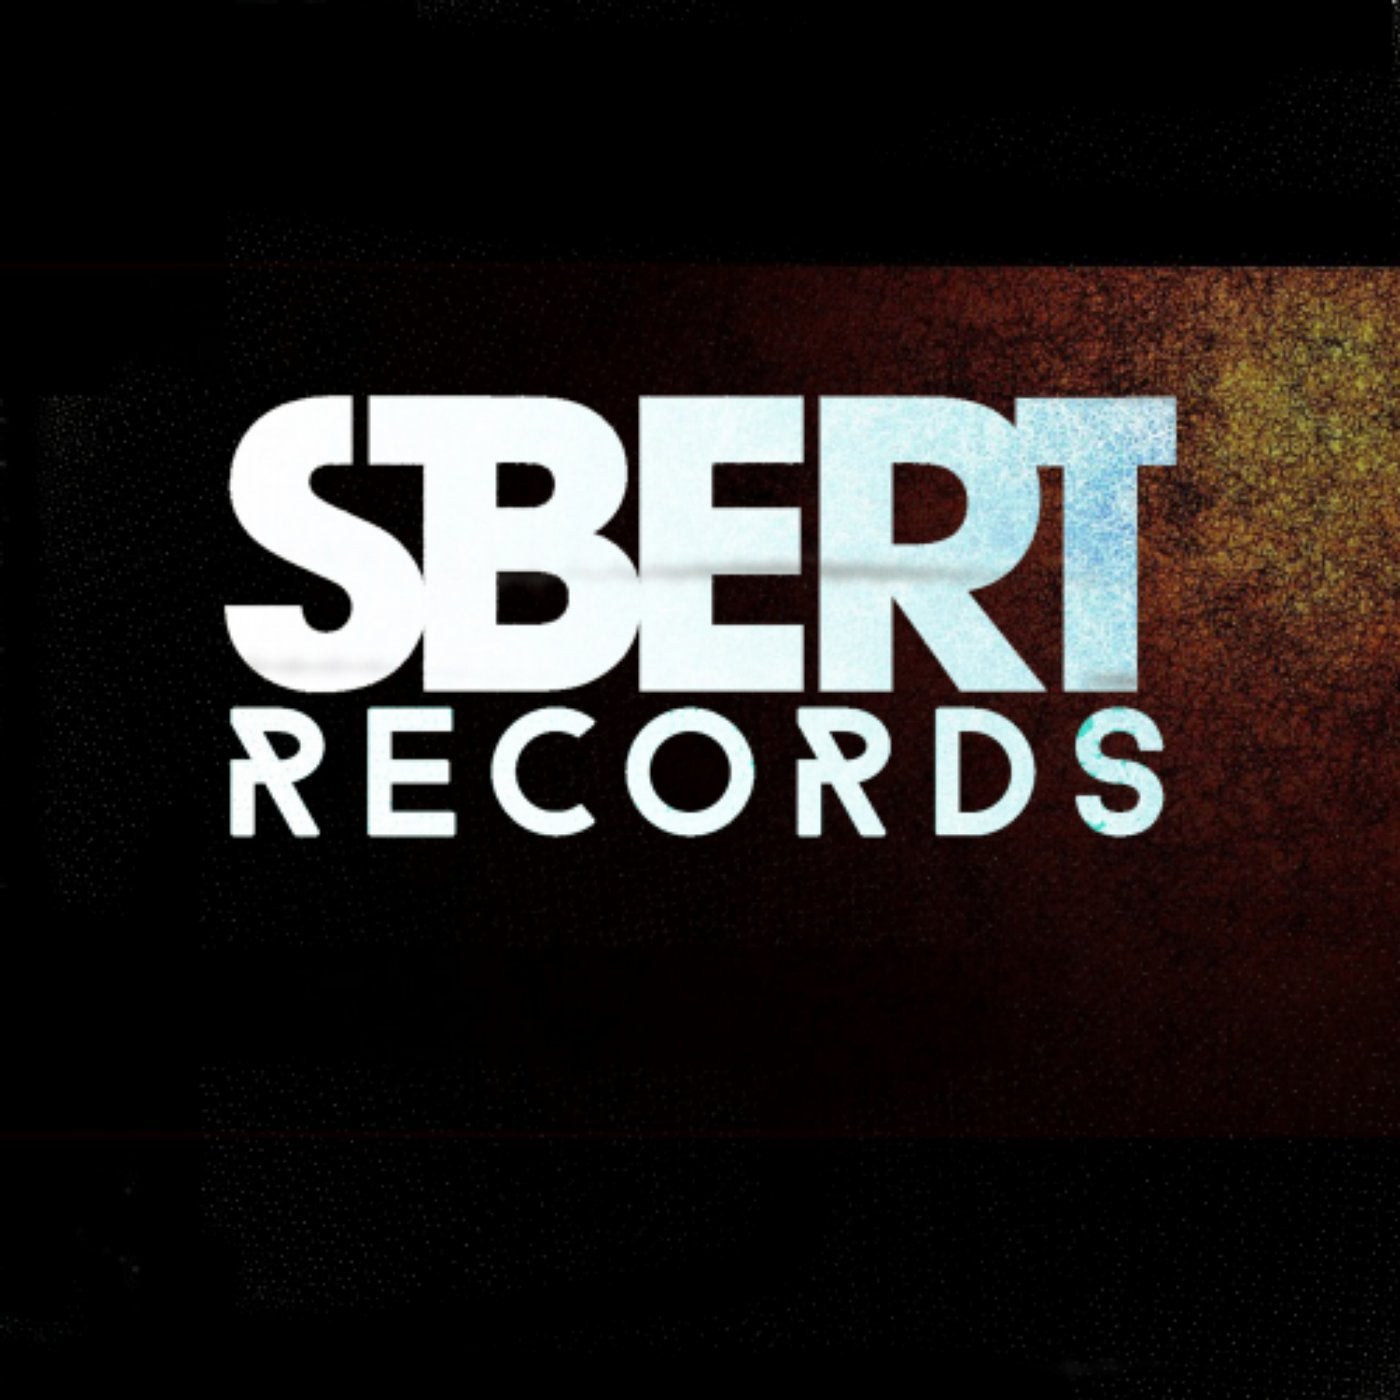 Sbert. Dani Sbert resolved problem (Original Mix).